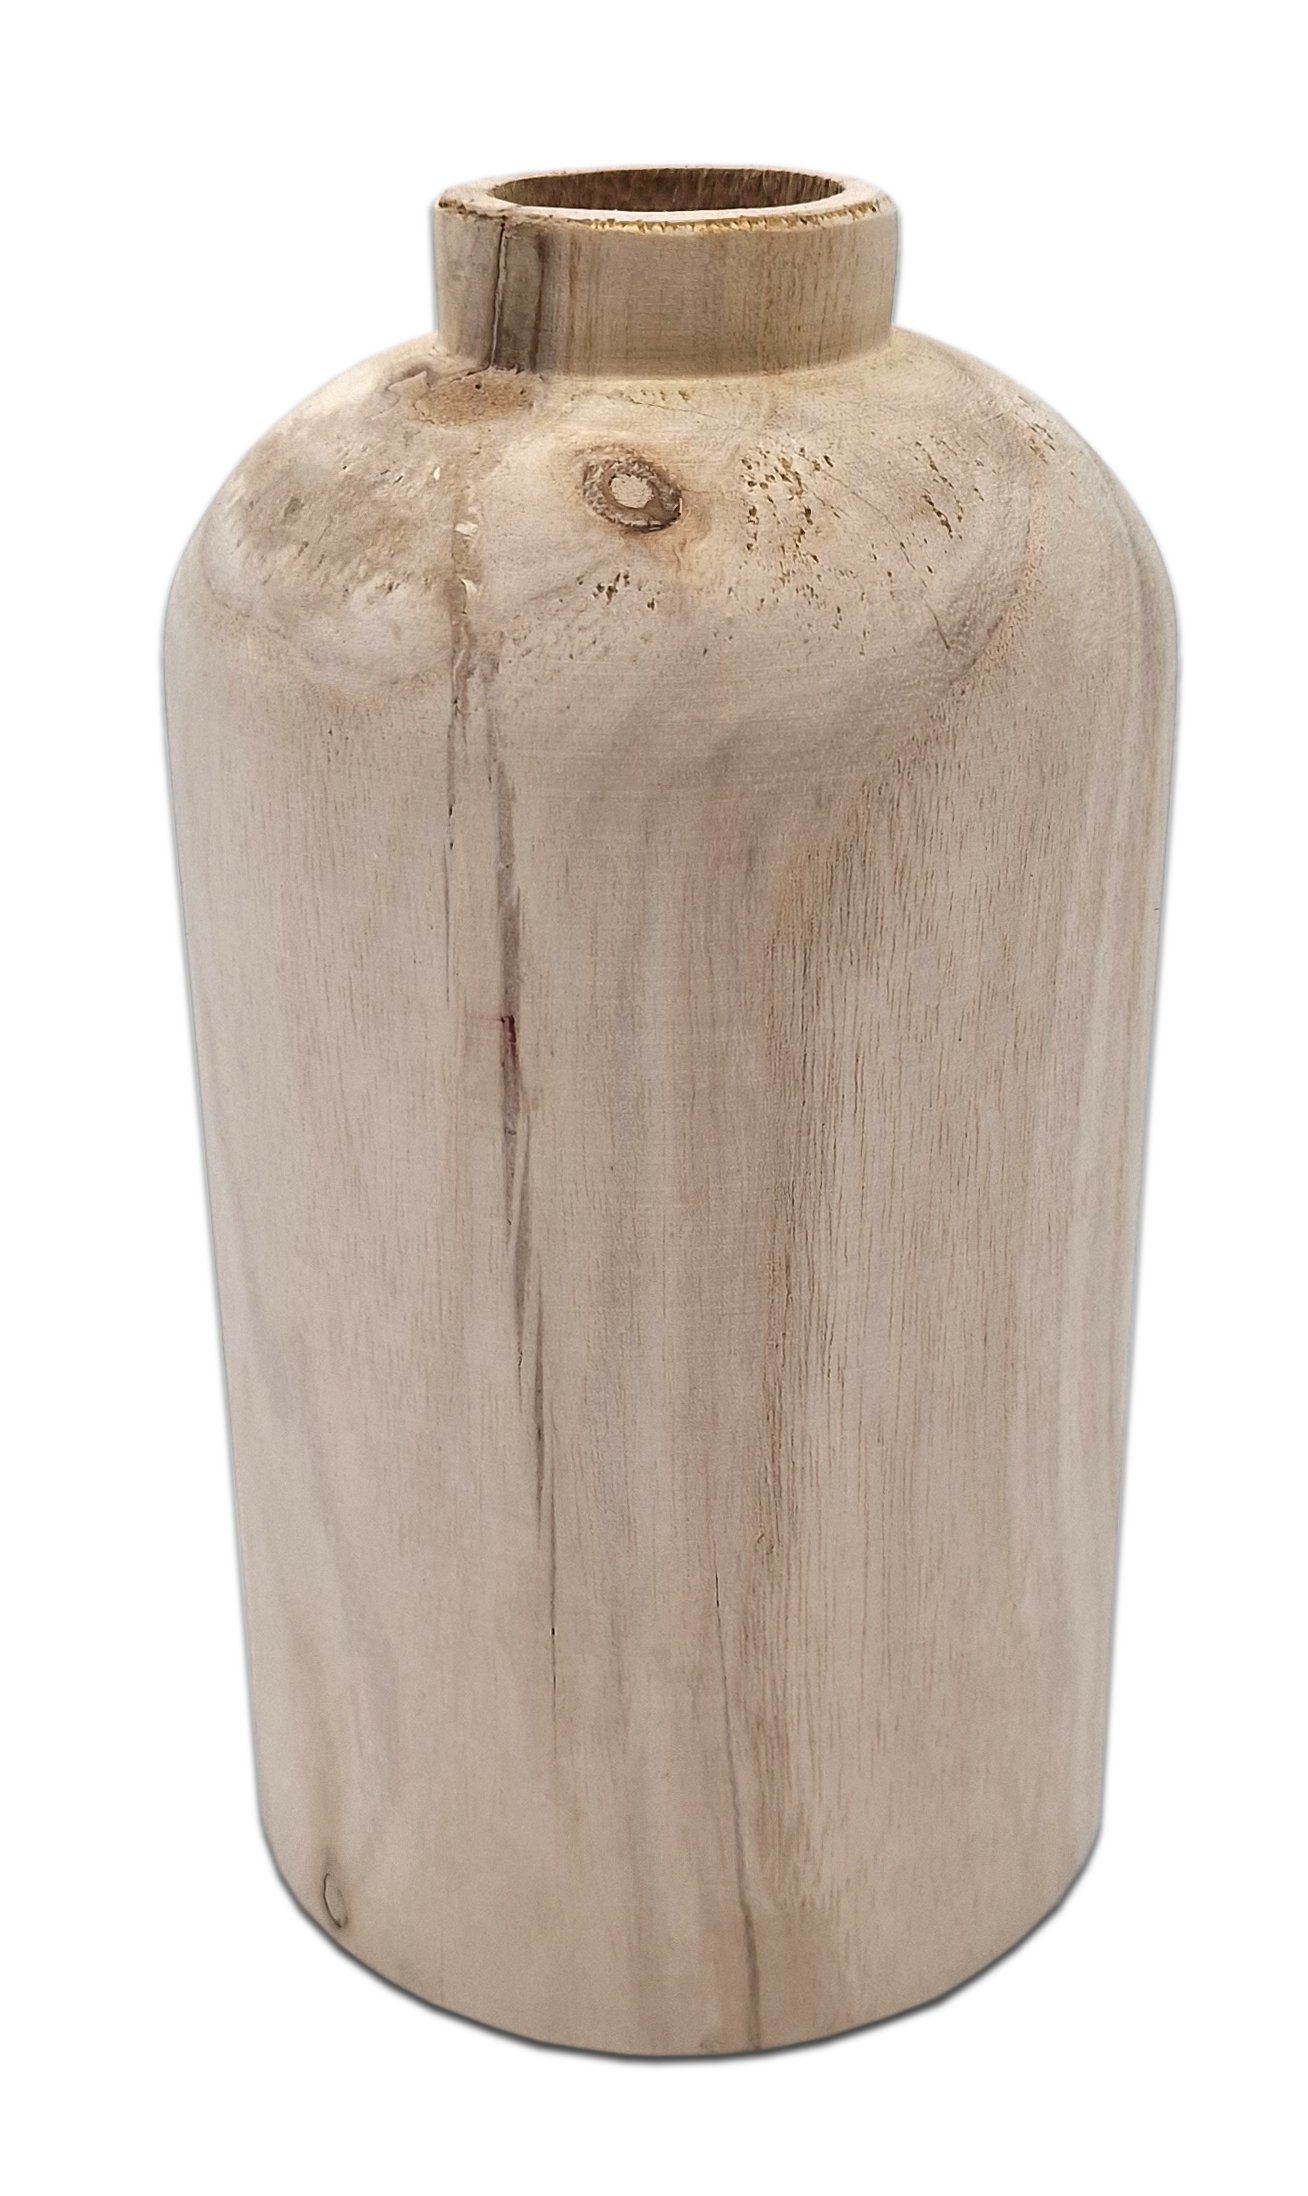 Flasche (Packung, 1 1 Holz cm Blumen Deko Dekovase St., naturbelassen Design - 21 Holzvase natur Vase Spetebo Vase),